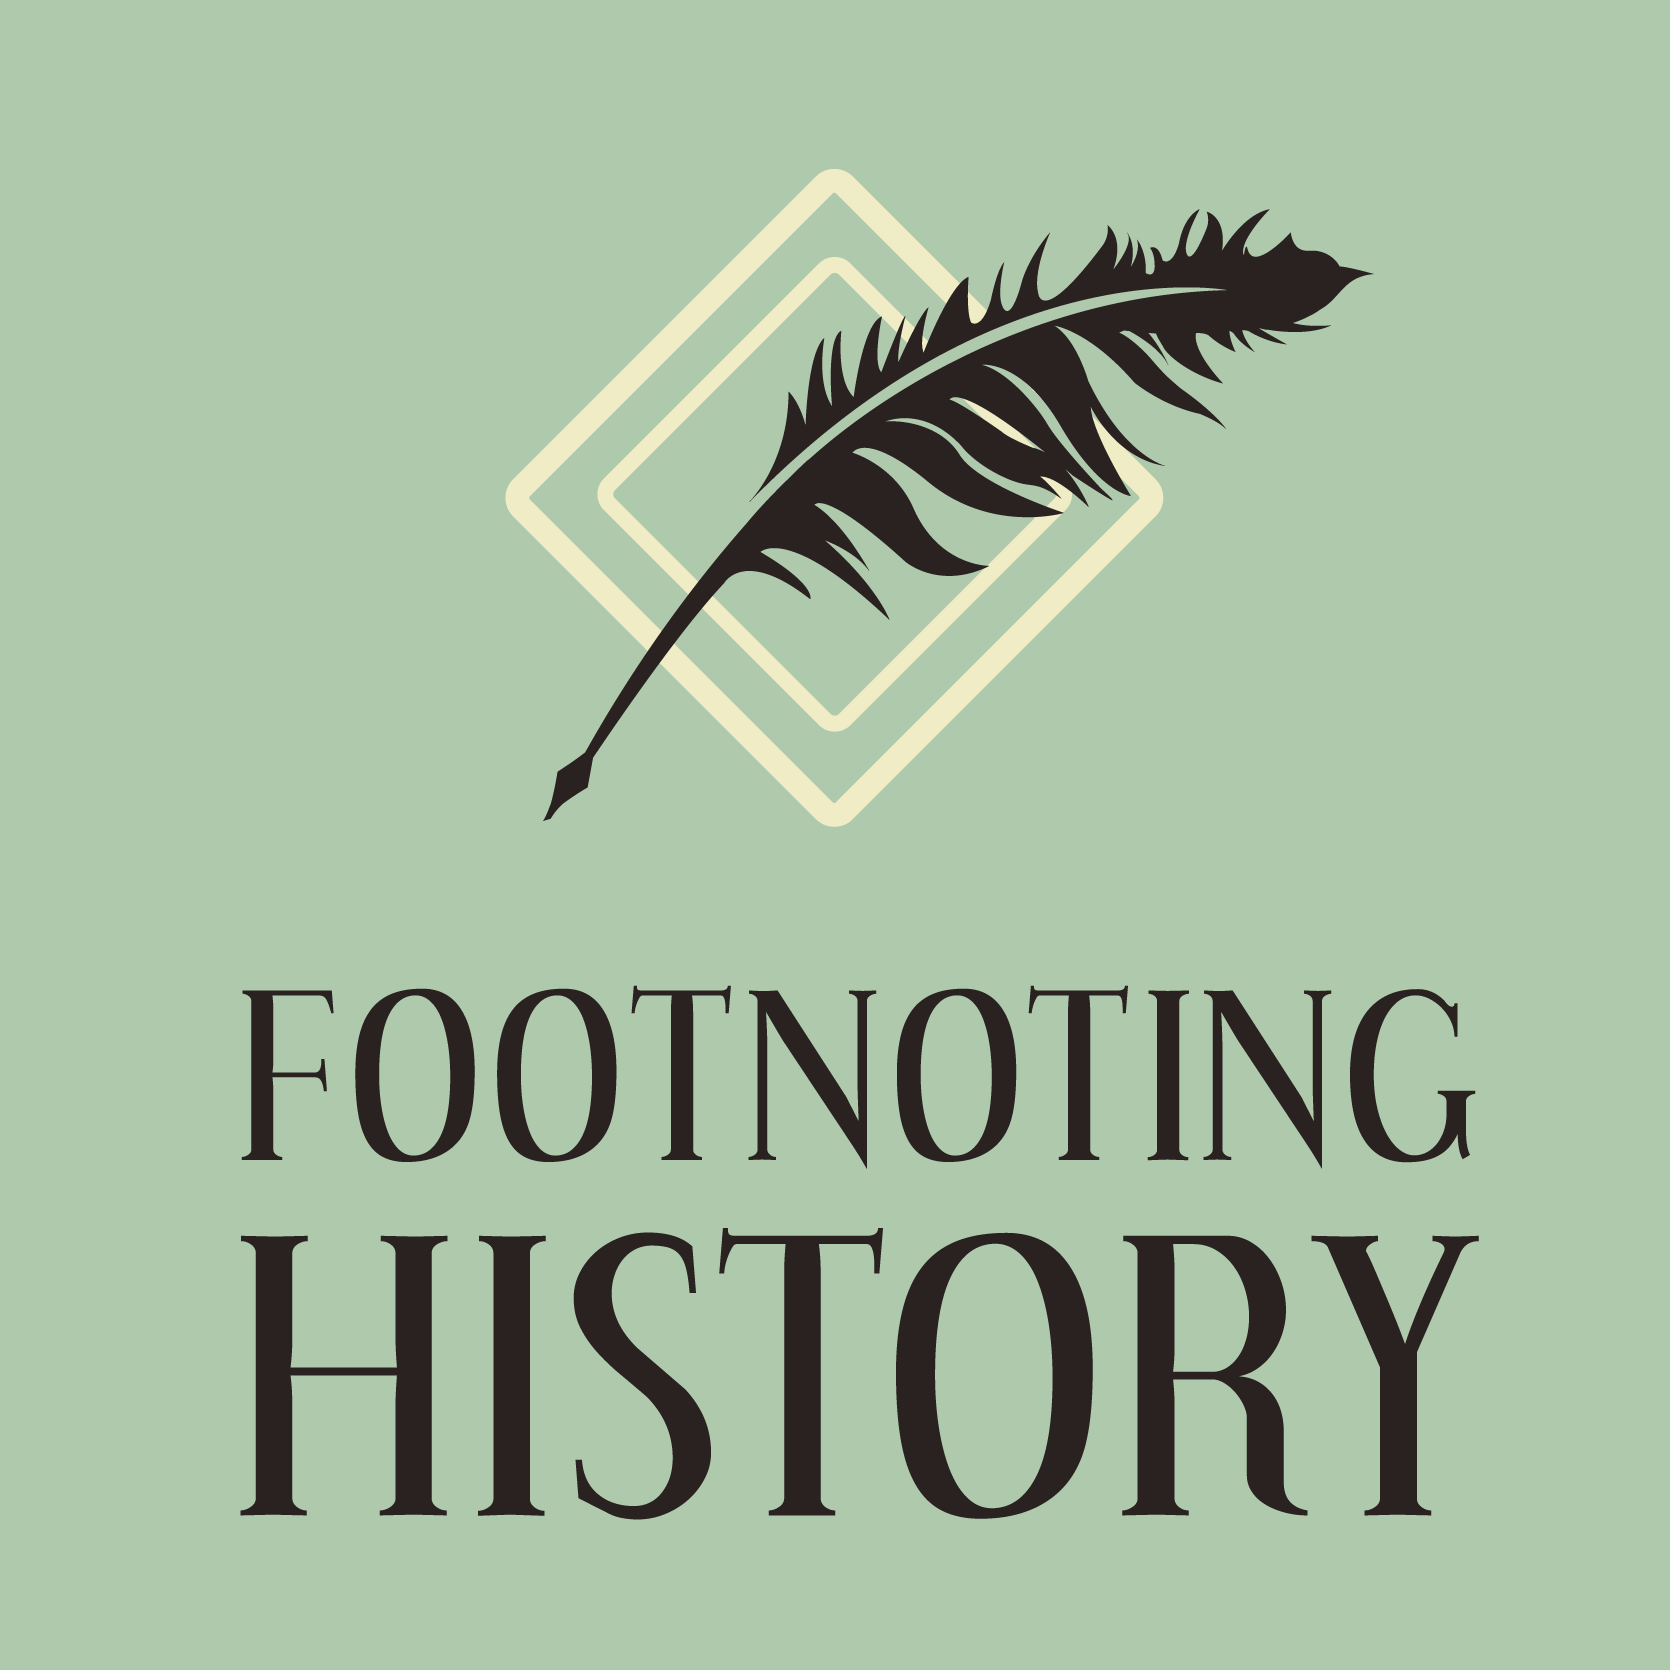 Footnoting History